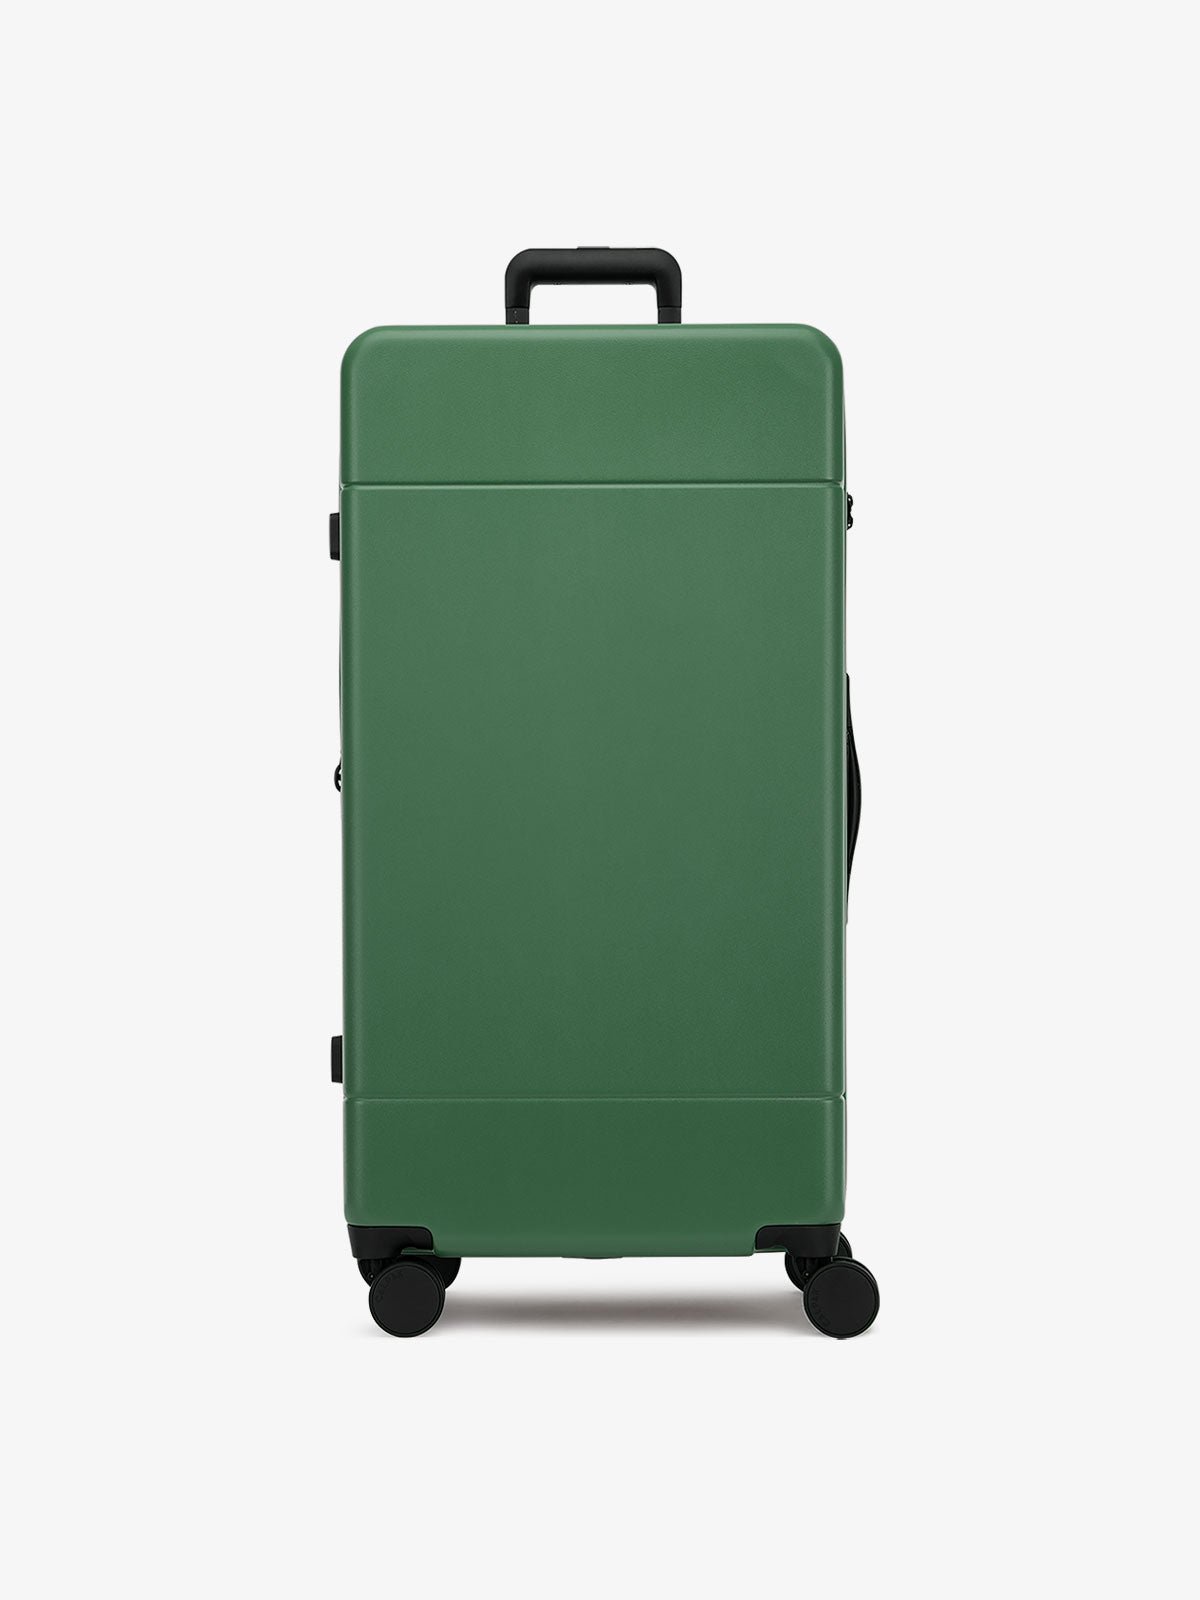 CALPAK Hue hard side polycarbonate trunk luggage in dark green emerald